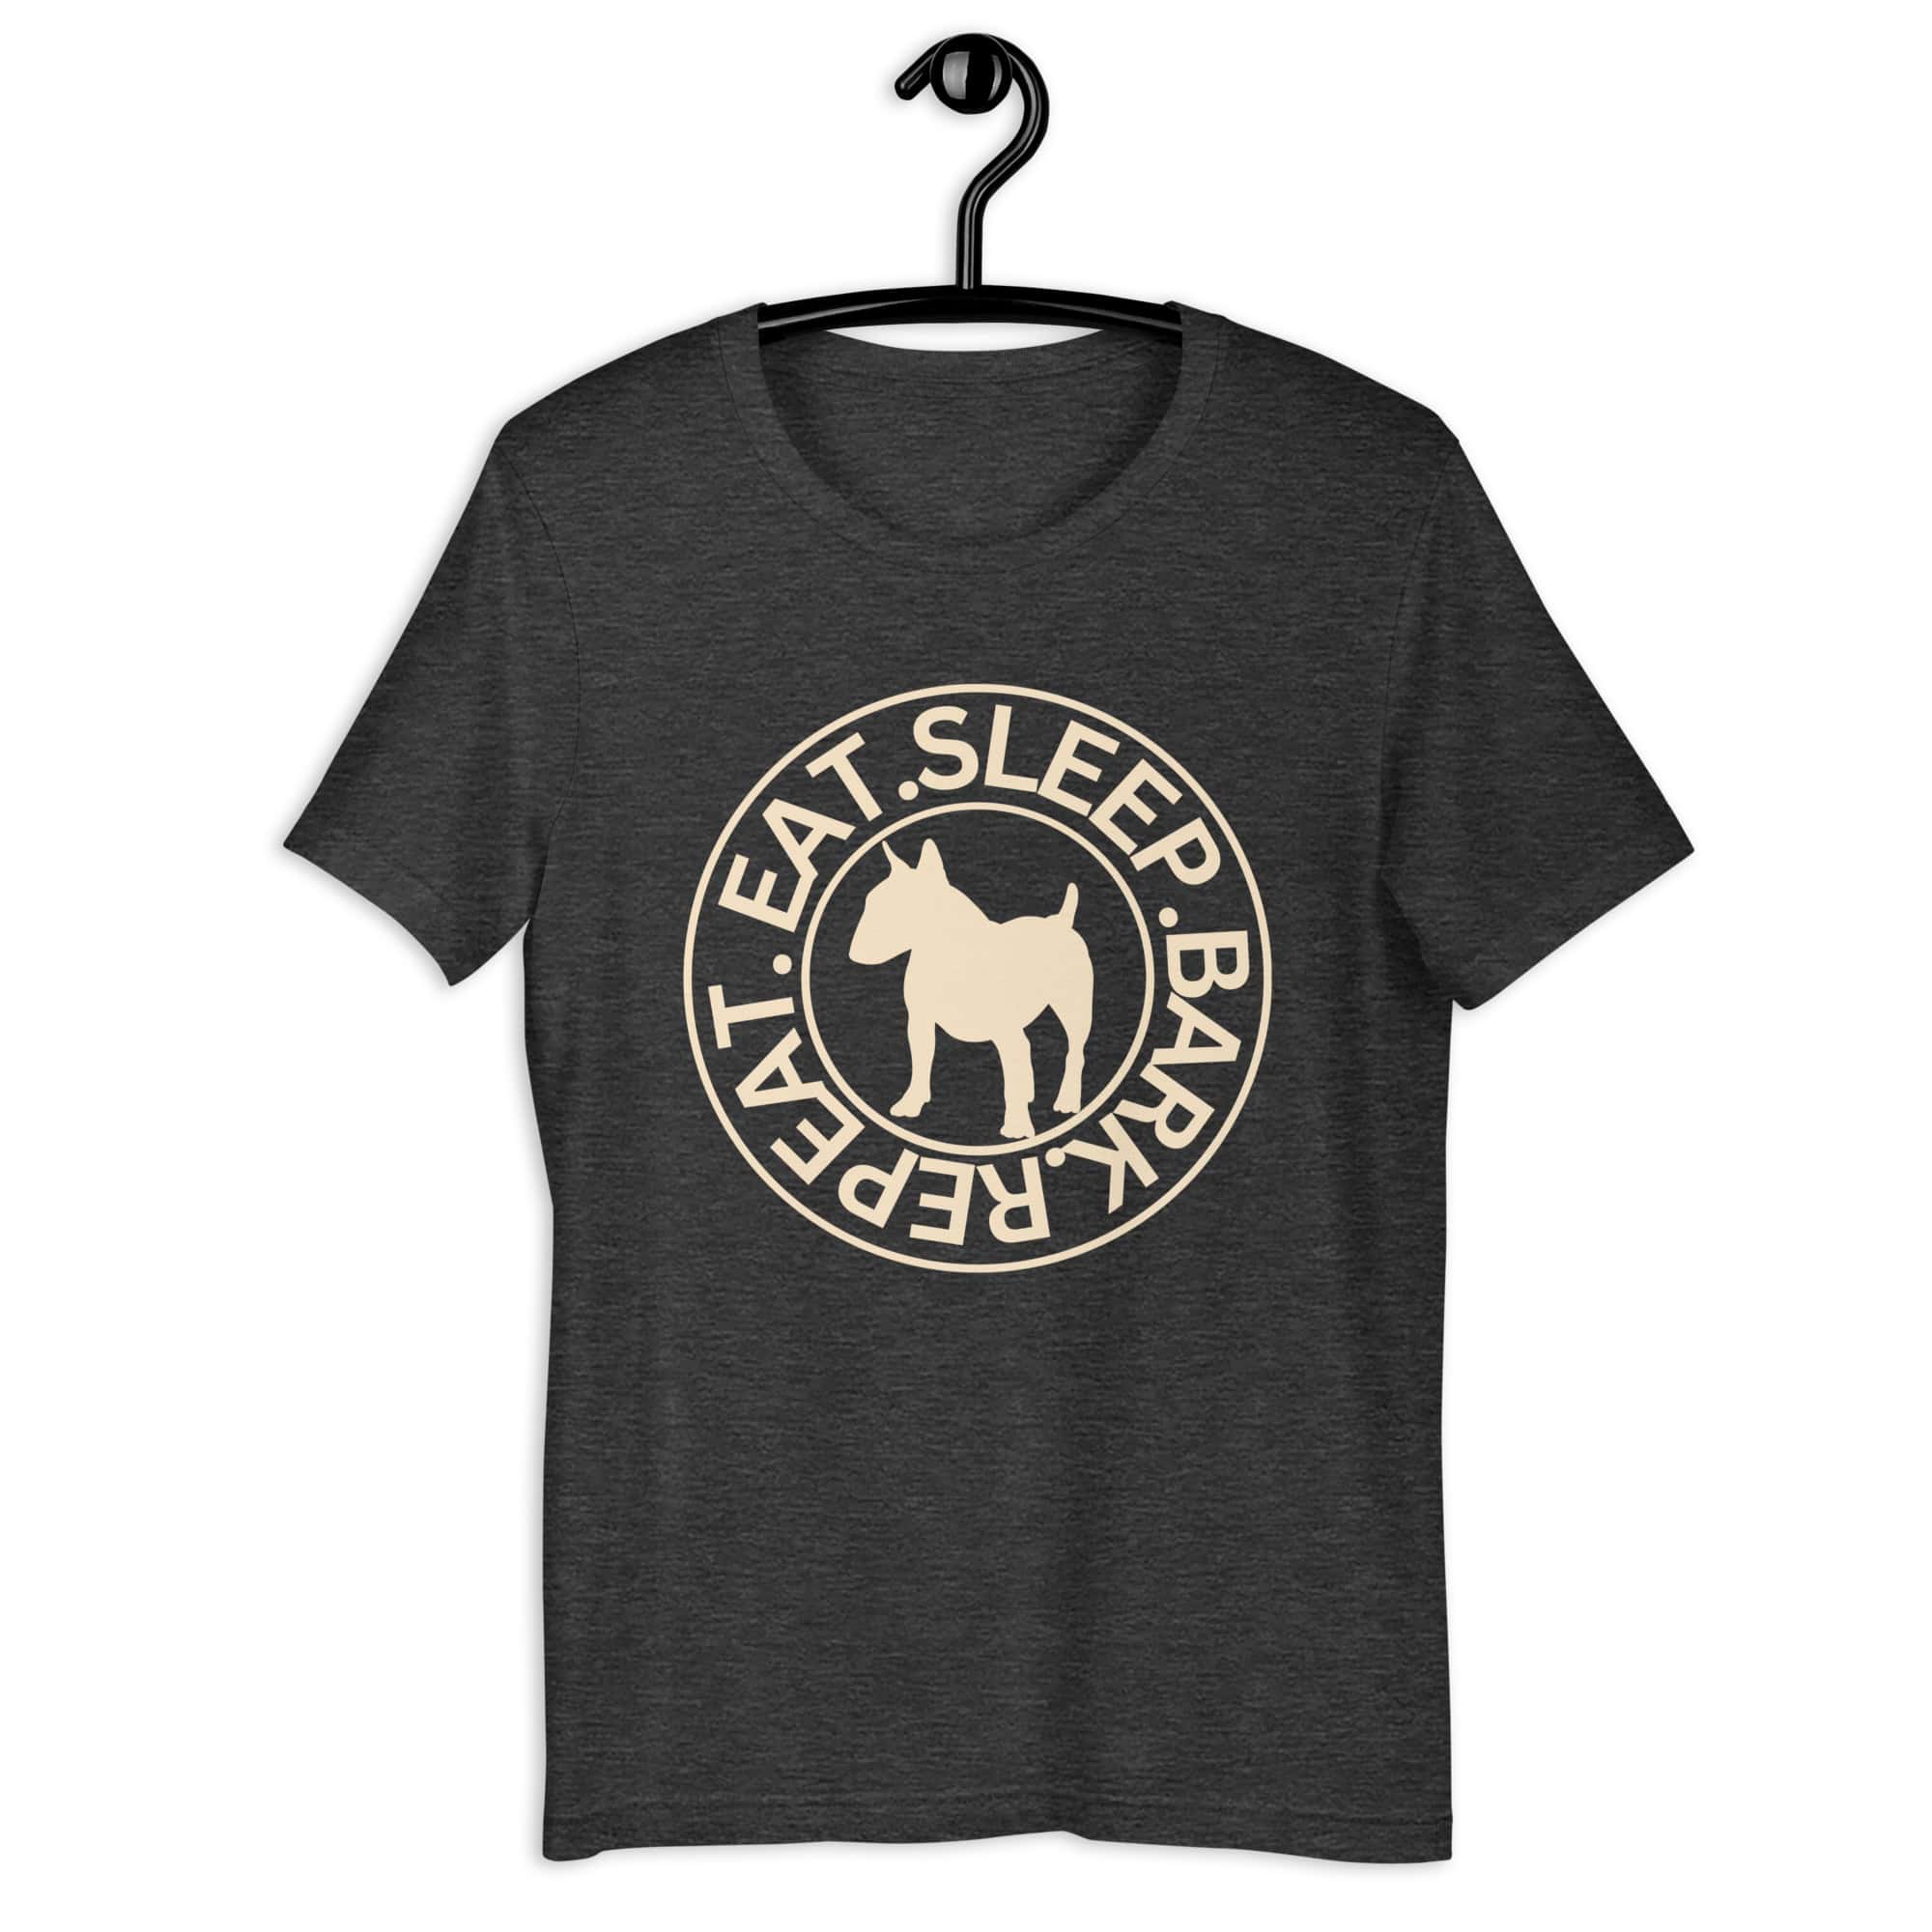 Eat Sleep Bark Repeat Bull Terrier Unisex T-Shirt. Dark Grey